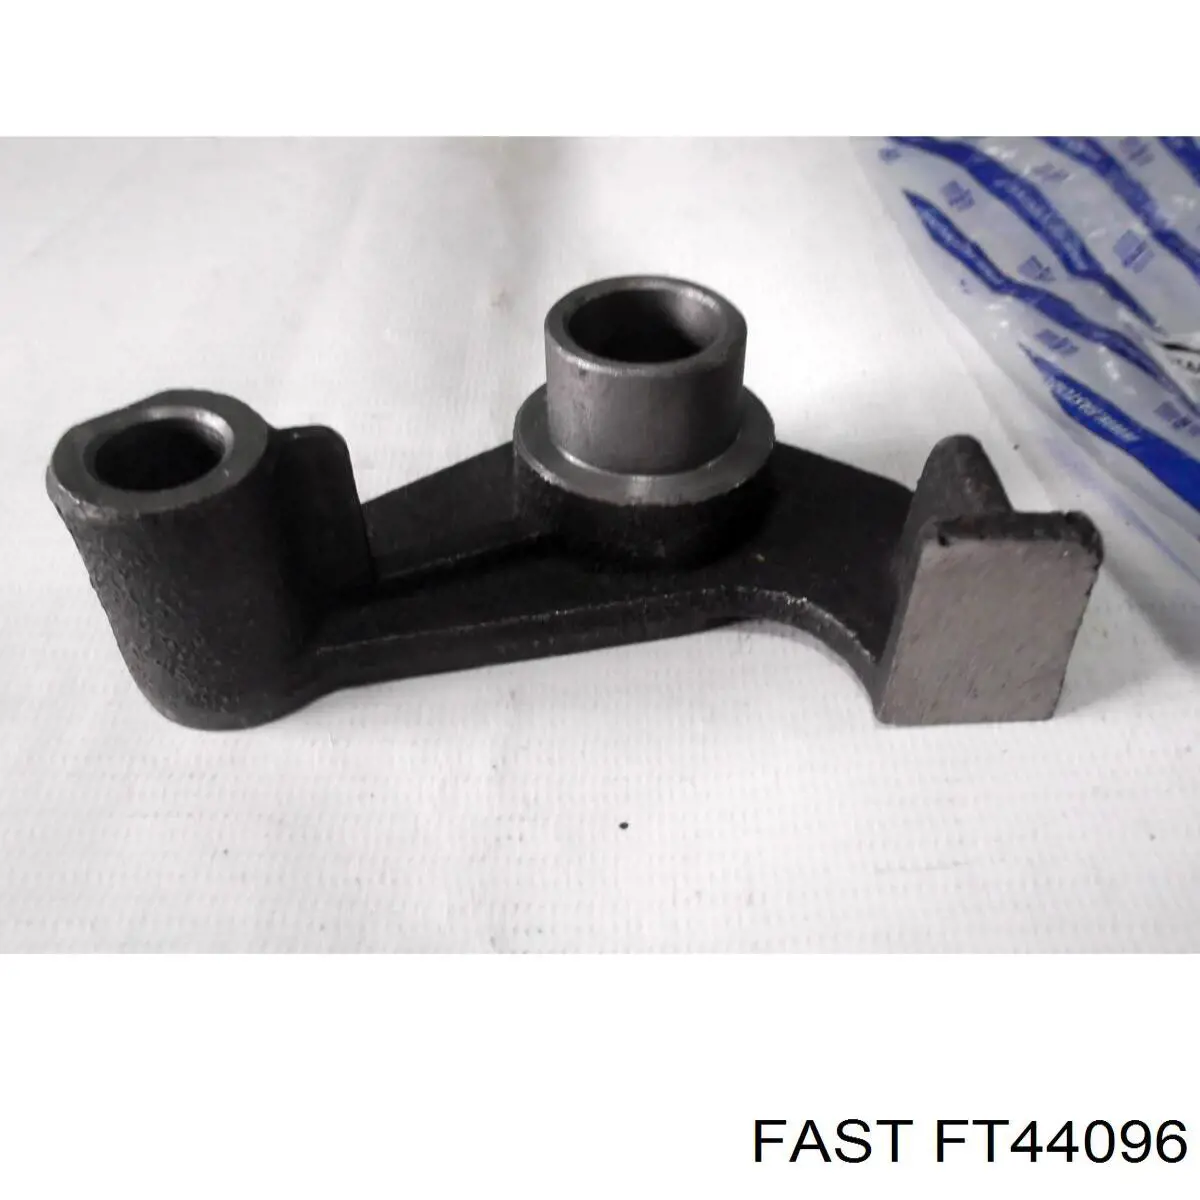 FT44096 Fast soporte del tensor de la correa de distribuicion